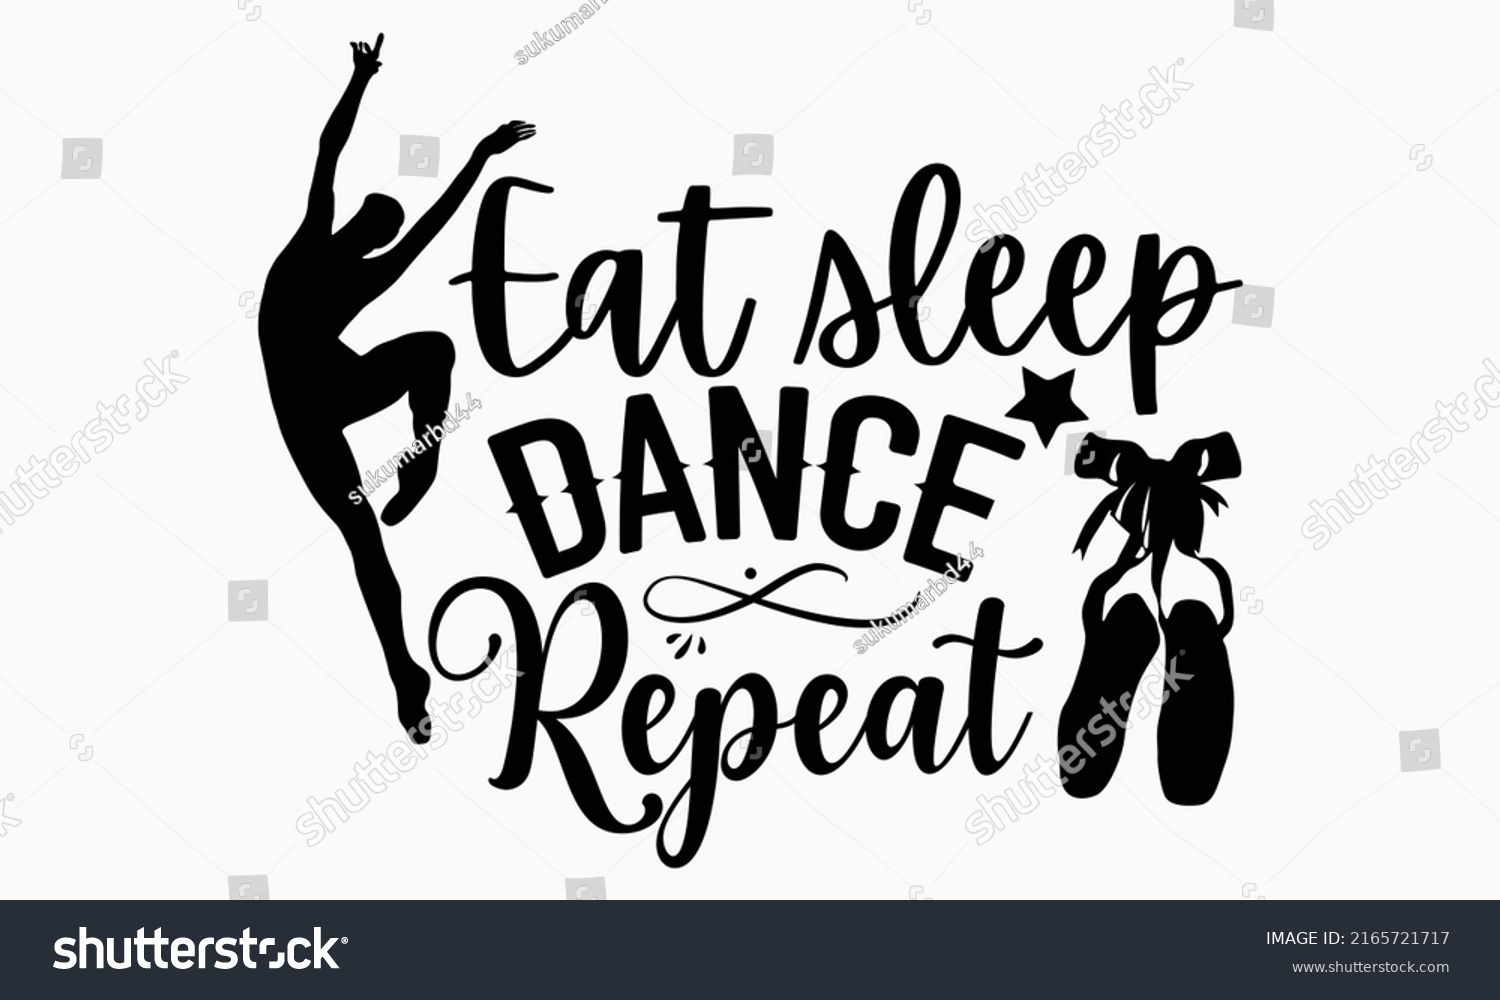 SVG of Eat sleep dance repeat - Ballet t shirt design, SVG Files for Cutting, Handmade calligraphy vector illustration, Hand written vector sign, EPS svg